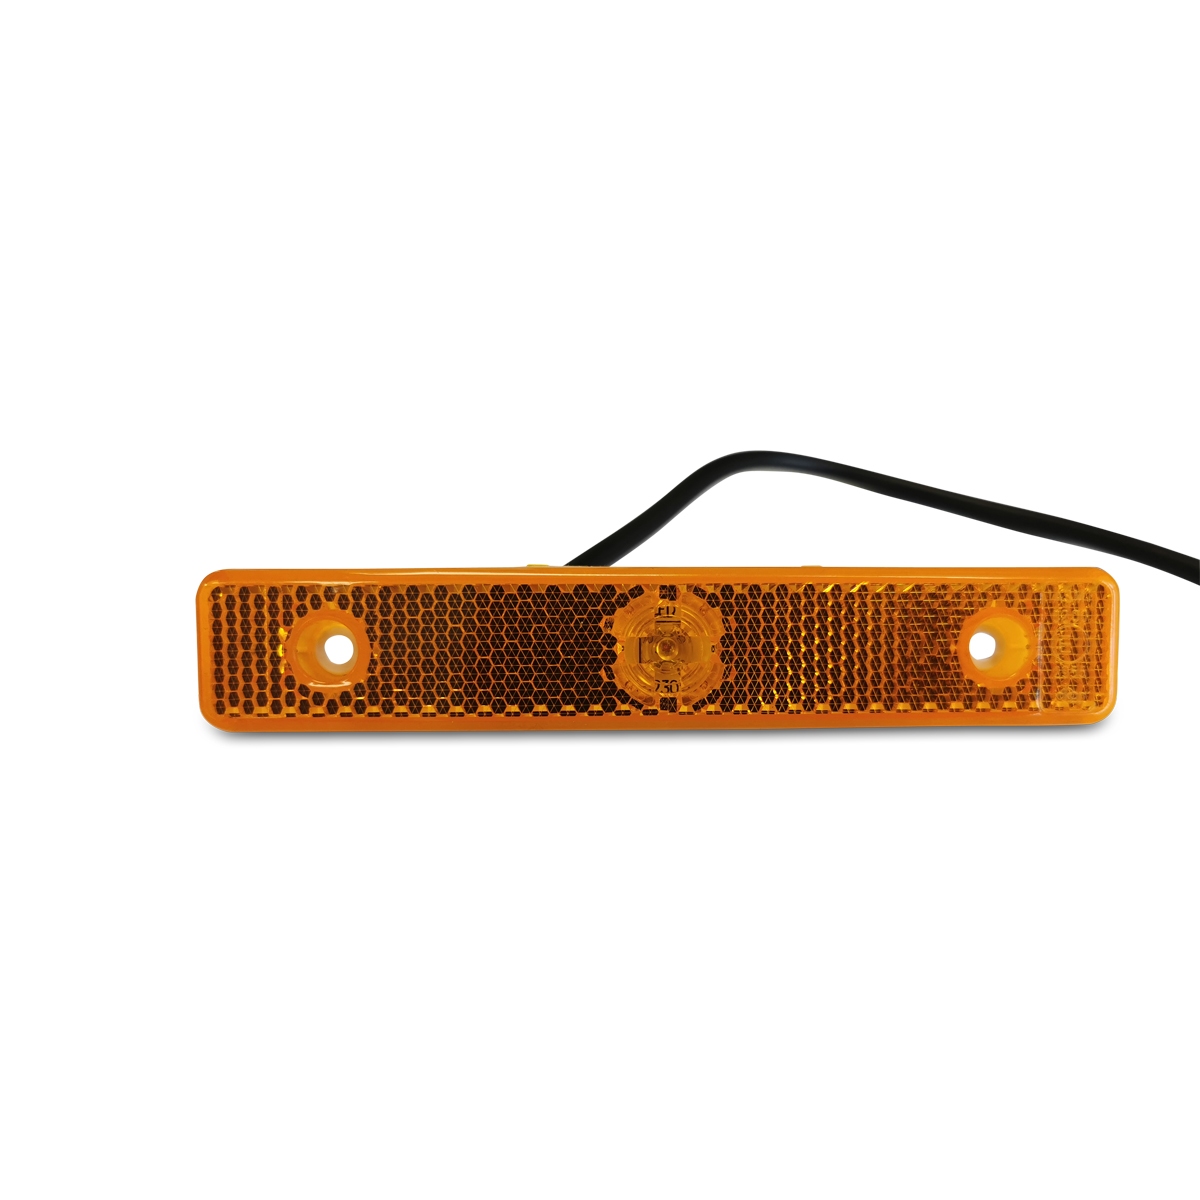 verlichting, markering, zij, LED, type SMLR 2013, oranje